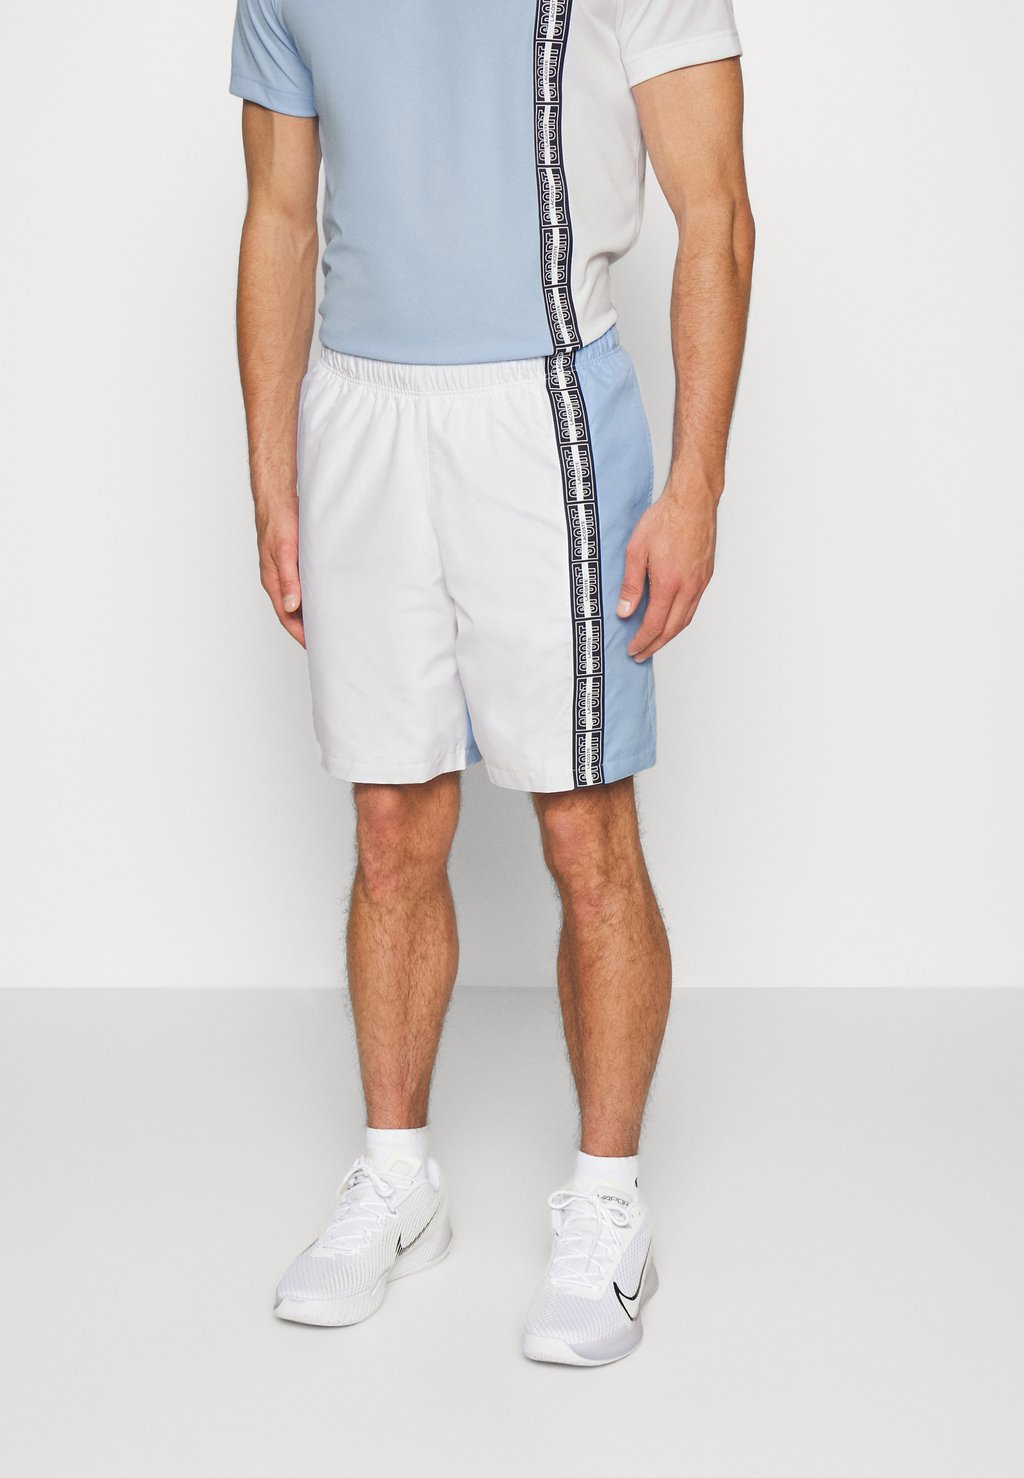 Спортивные шорты Tennis Lacoste, цвет white/navy blue